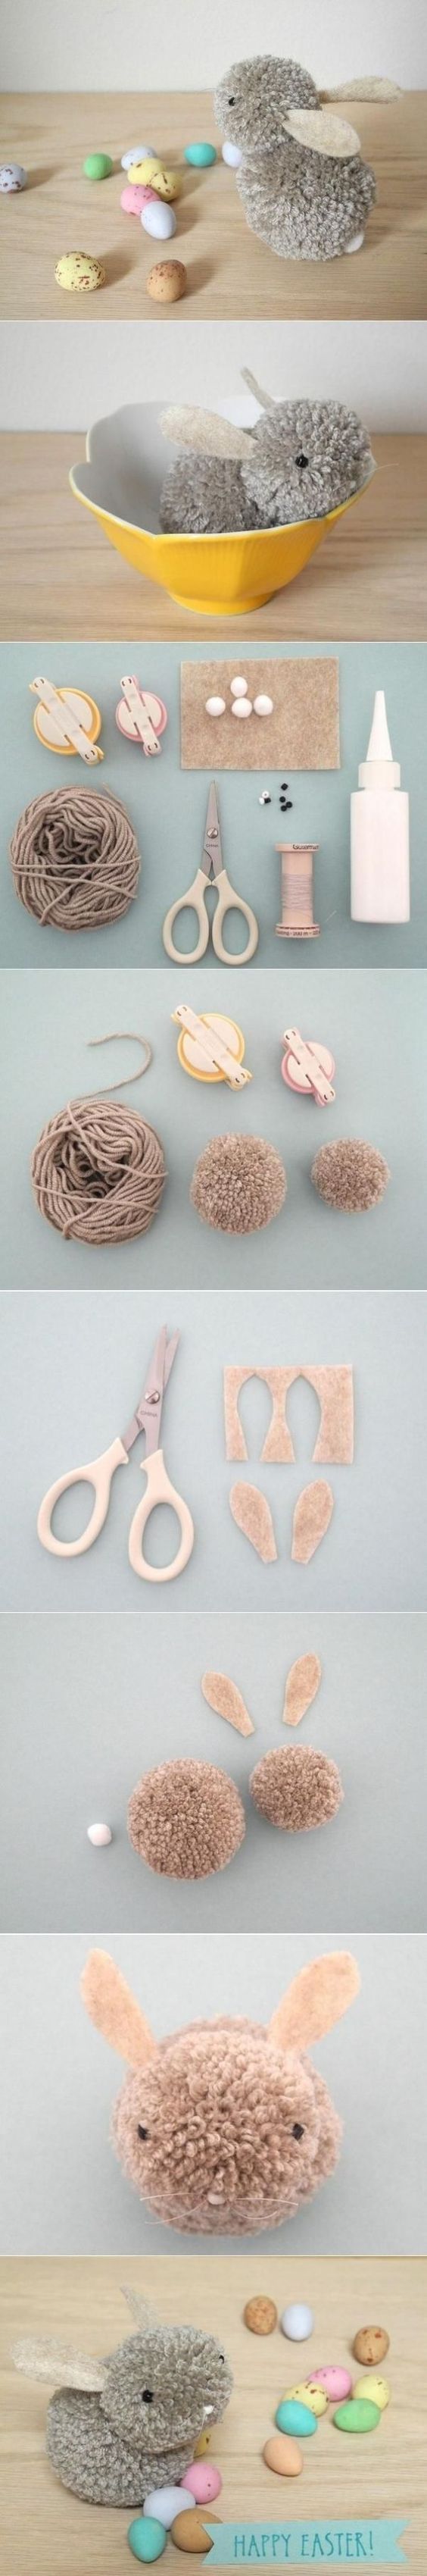 DIY Pom Pom rabbit craft